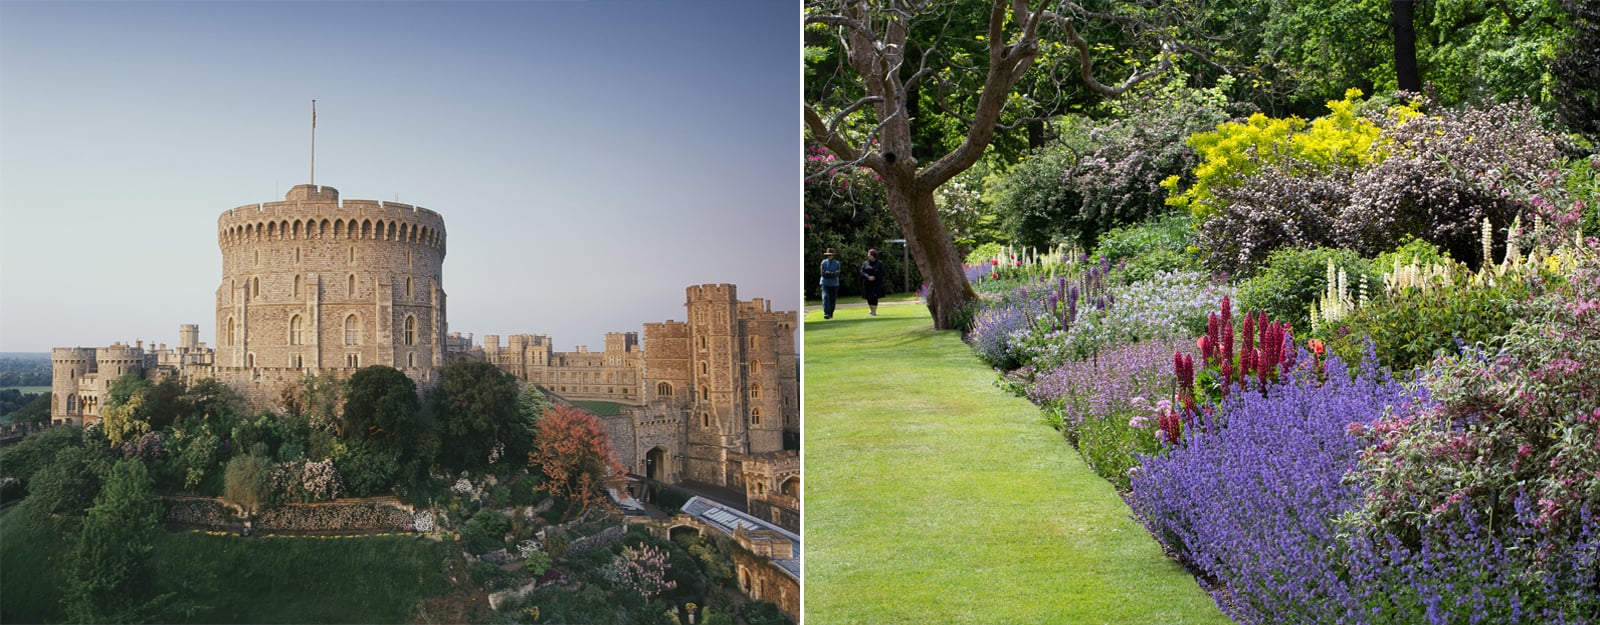 Windsor Castle and The Savill Garden